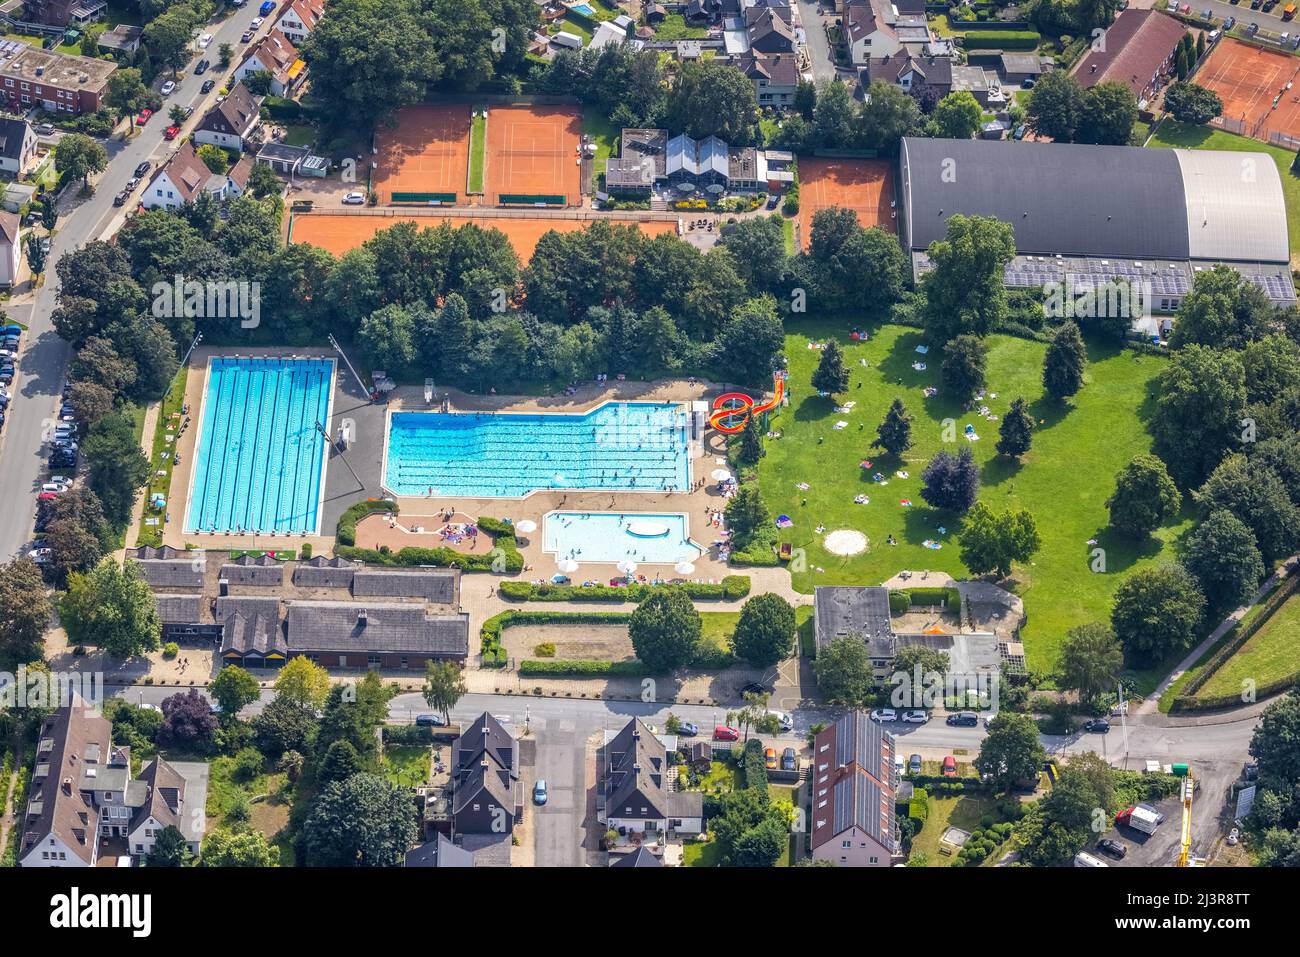 Aerial view, GSW Freibad Kamen-Mitte, Kamen, Ruhr area, North Rhine-Westphalia, Germany, Luftbild, GSW Freibad Kamen-Mitte, Kamen, Ruhrgebiet, Nordrhe Stock Photo